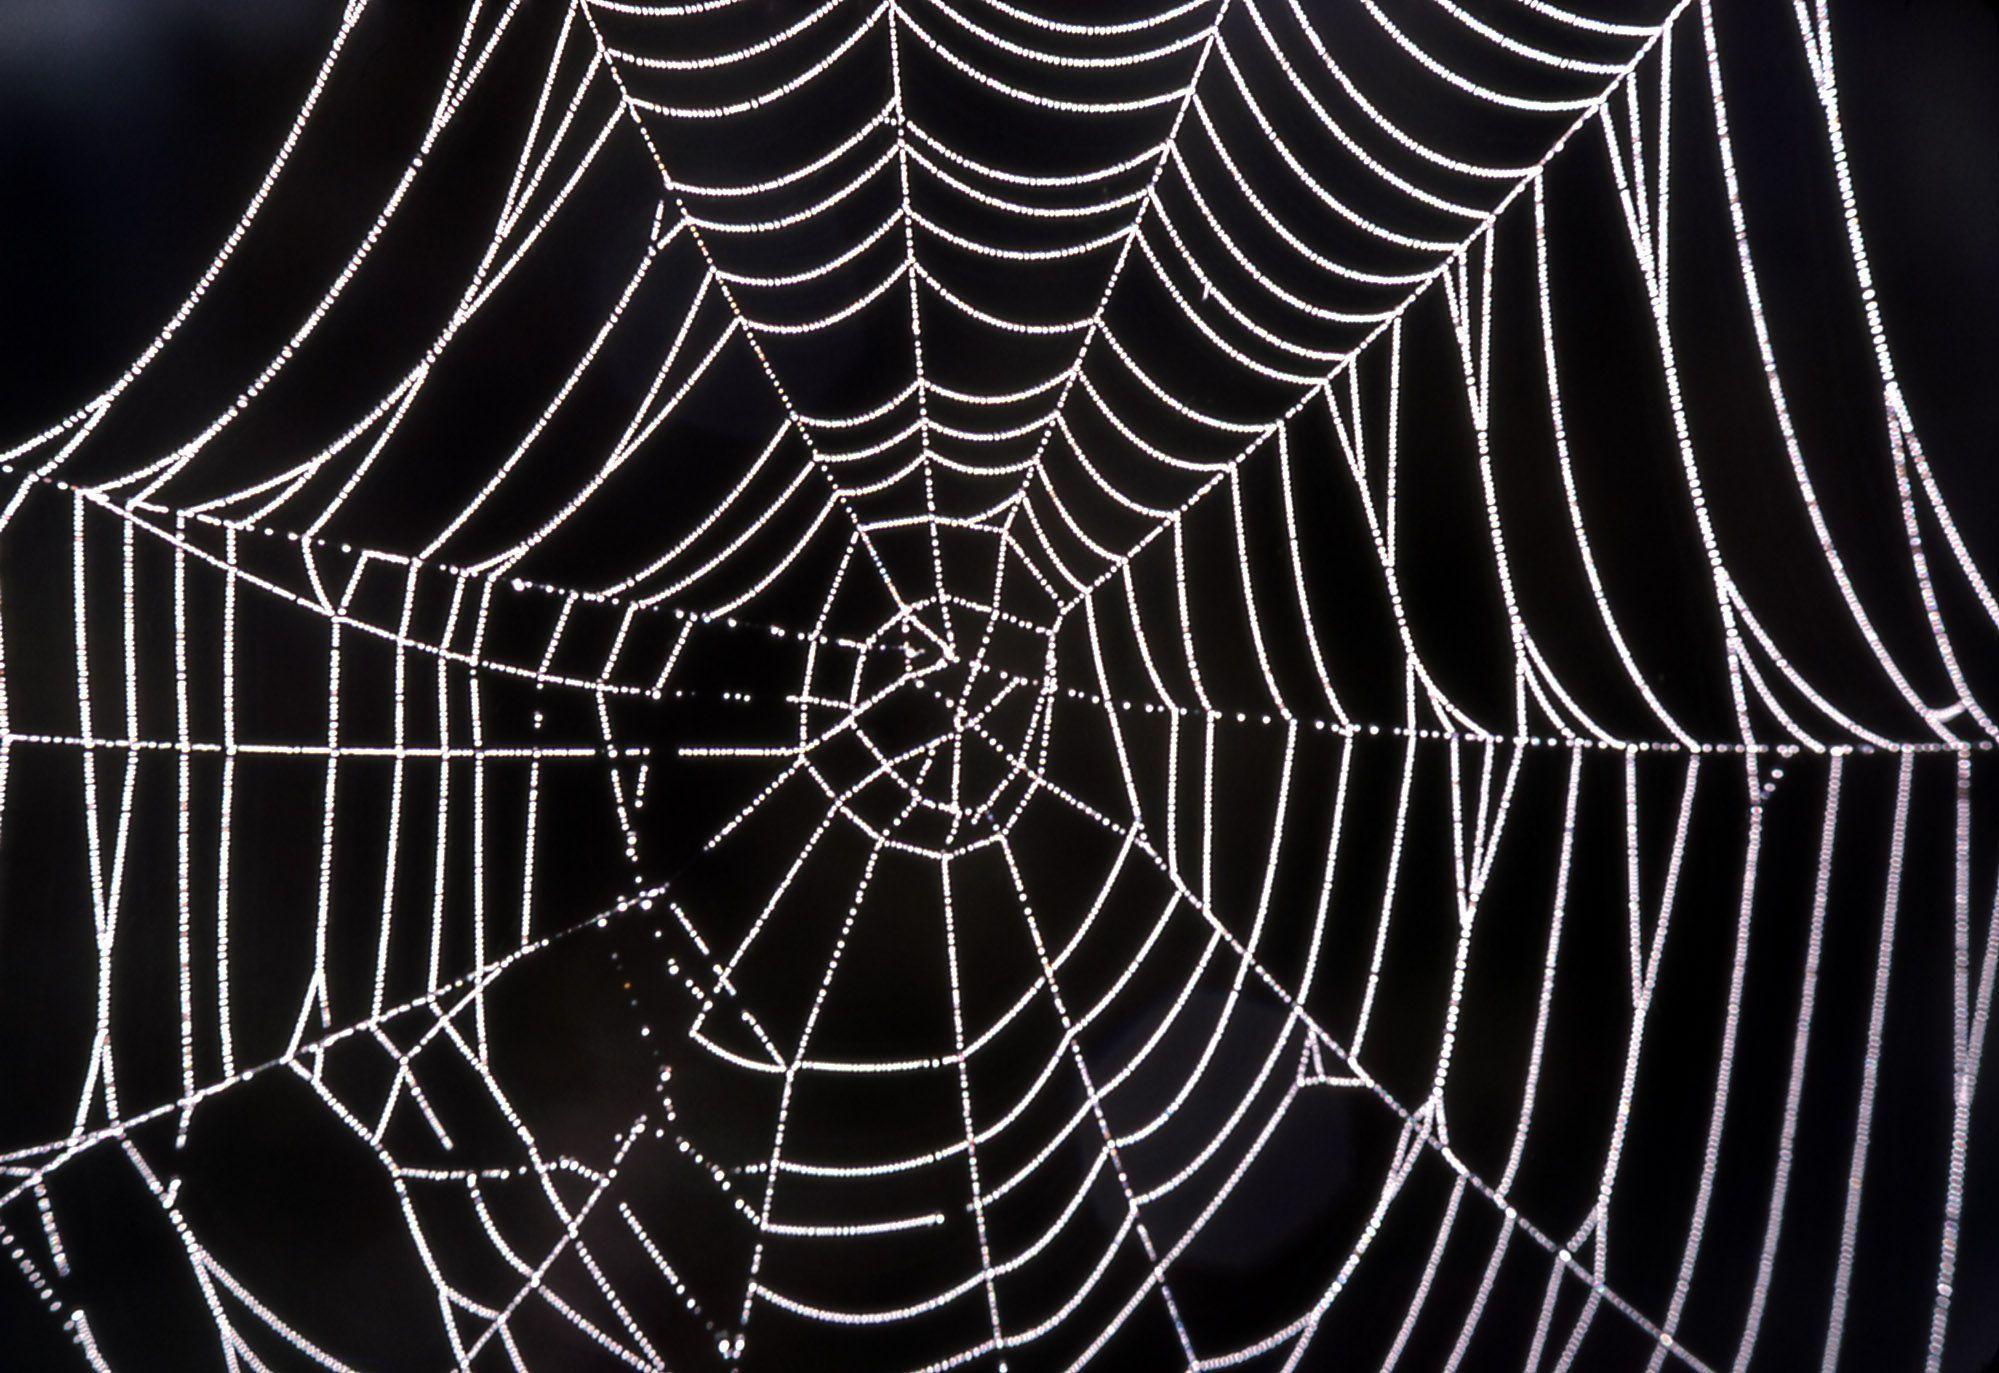 Gallery For Gt Spider Web Black Background